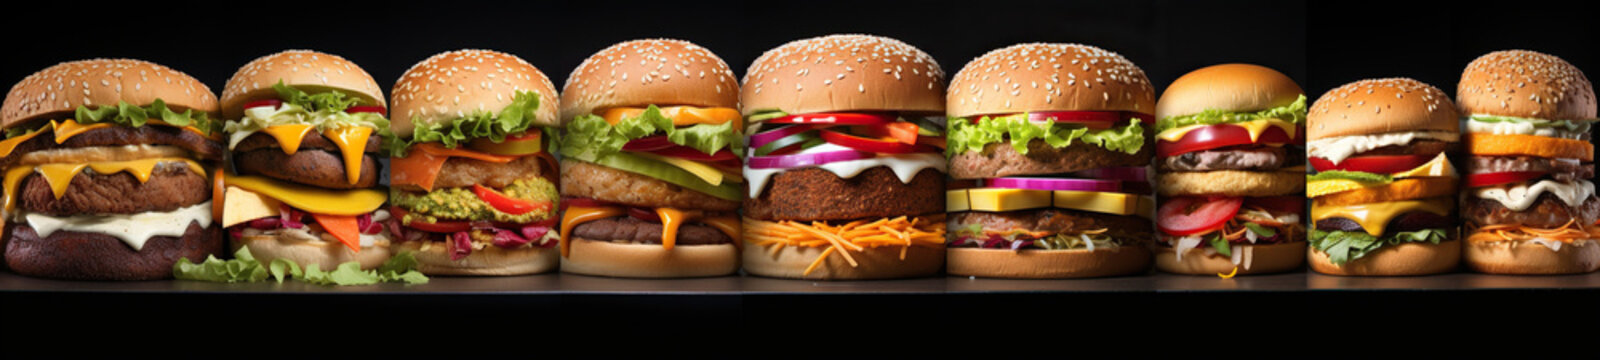 Set of different tasty burgers on black background